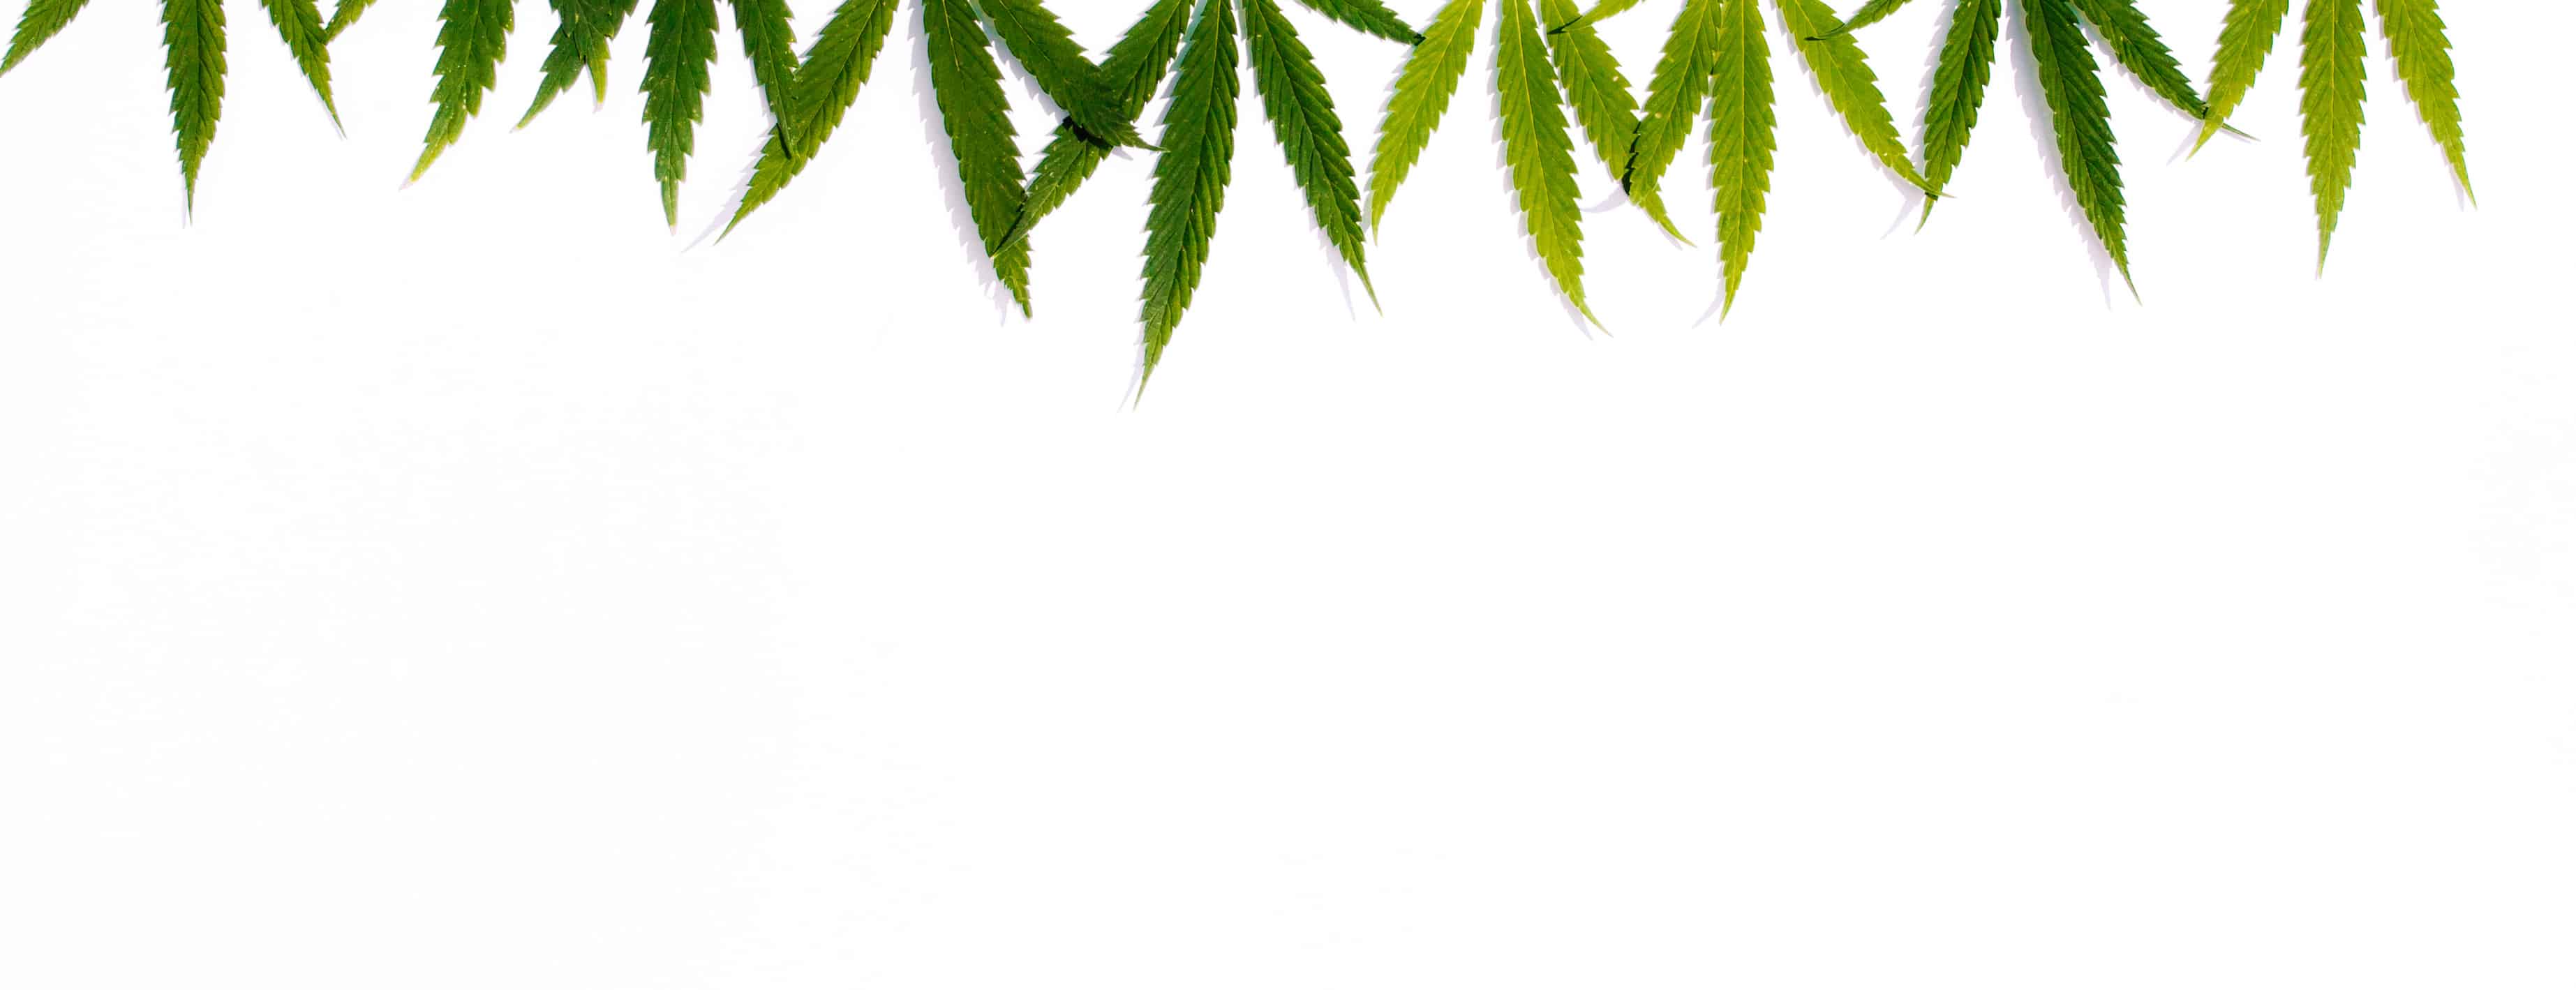 Green Hemp Ganja Leaf On White Isolated Background Cannabis